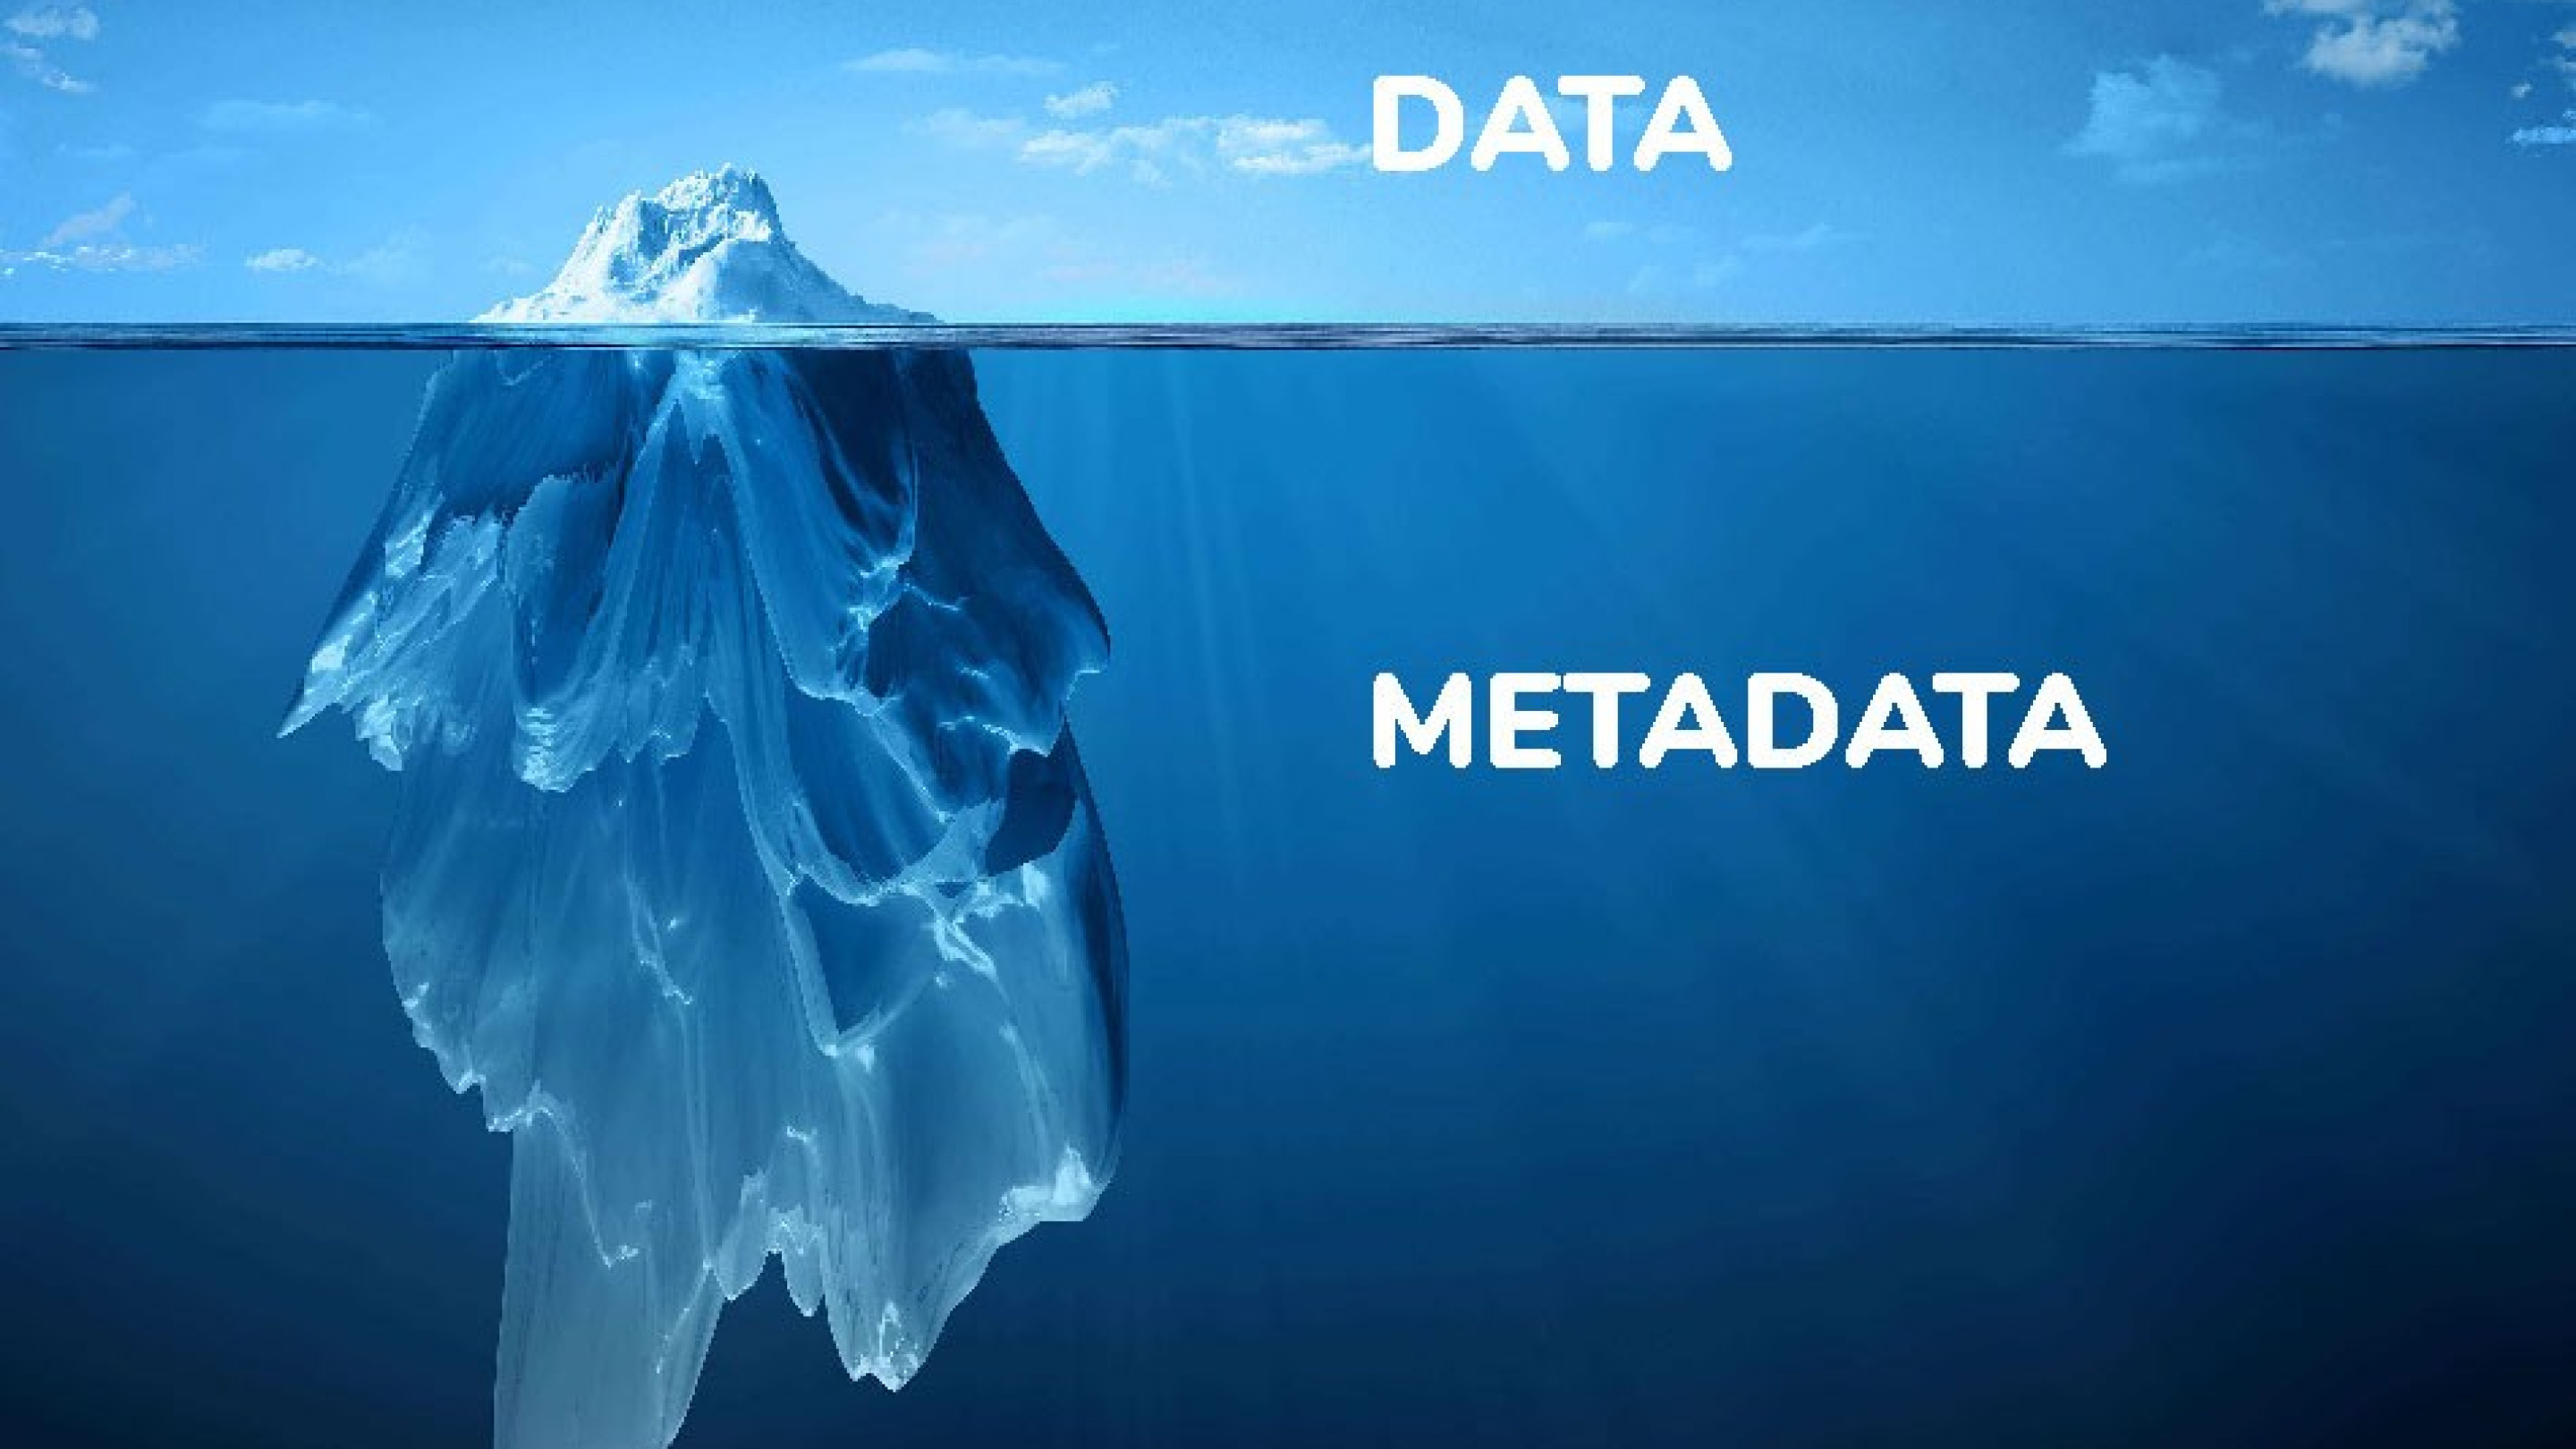 The data iceberg